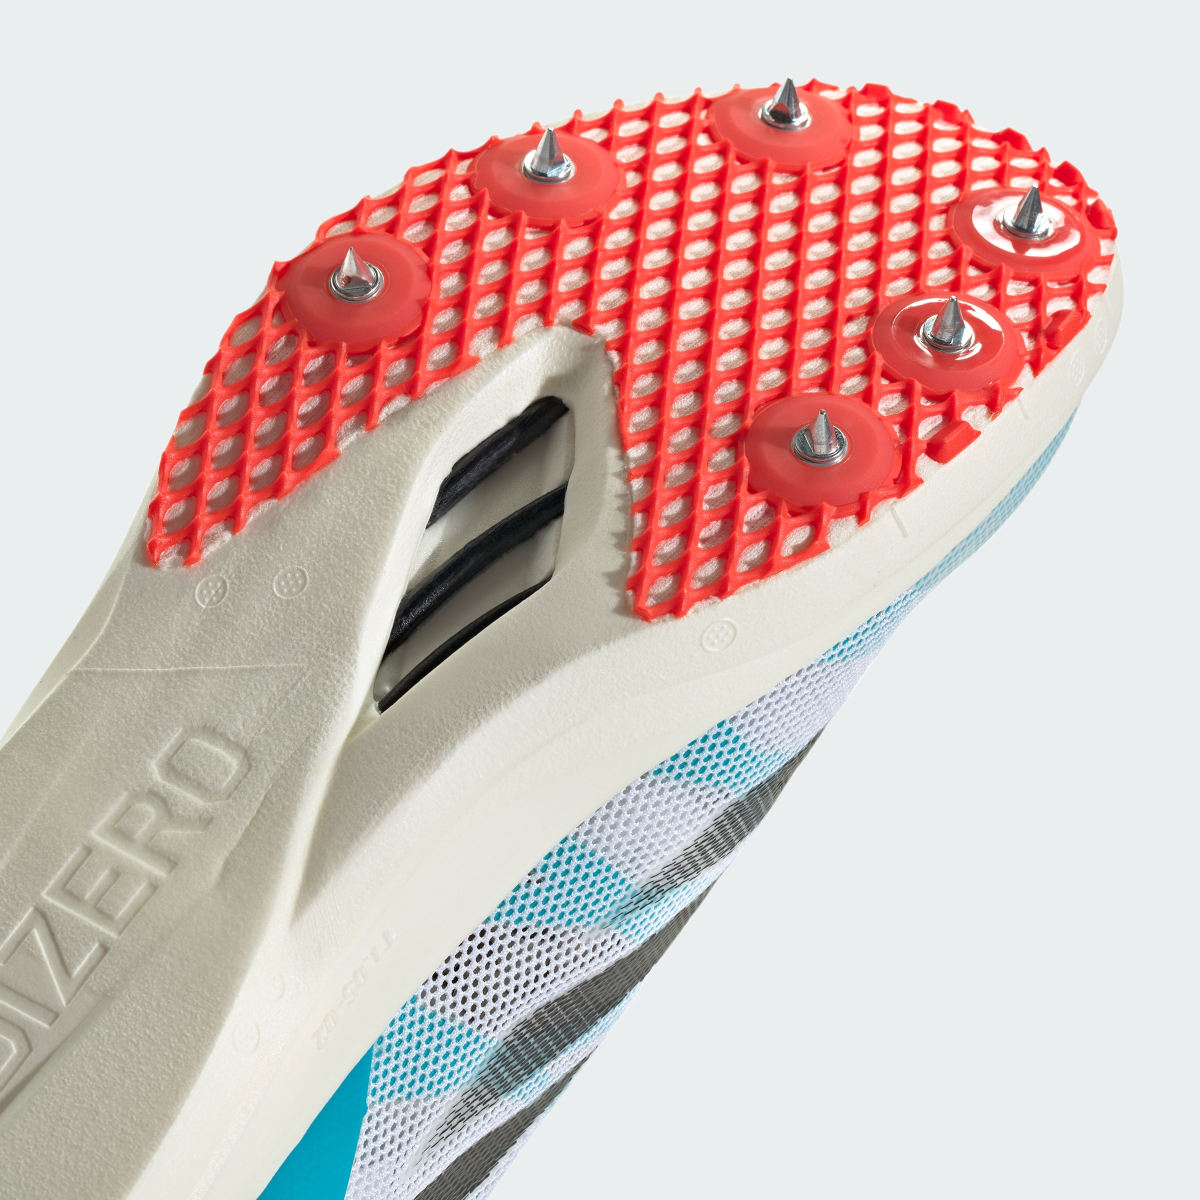 Adidas Adizero Avanti Tyo Track and Field Lightstrike Shoes. 8